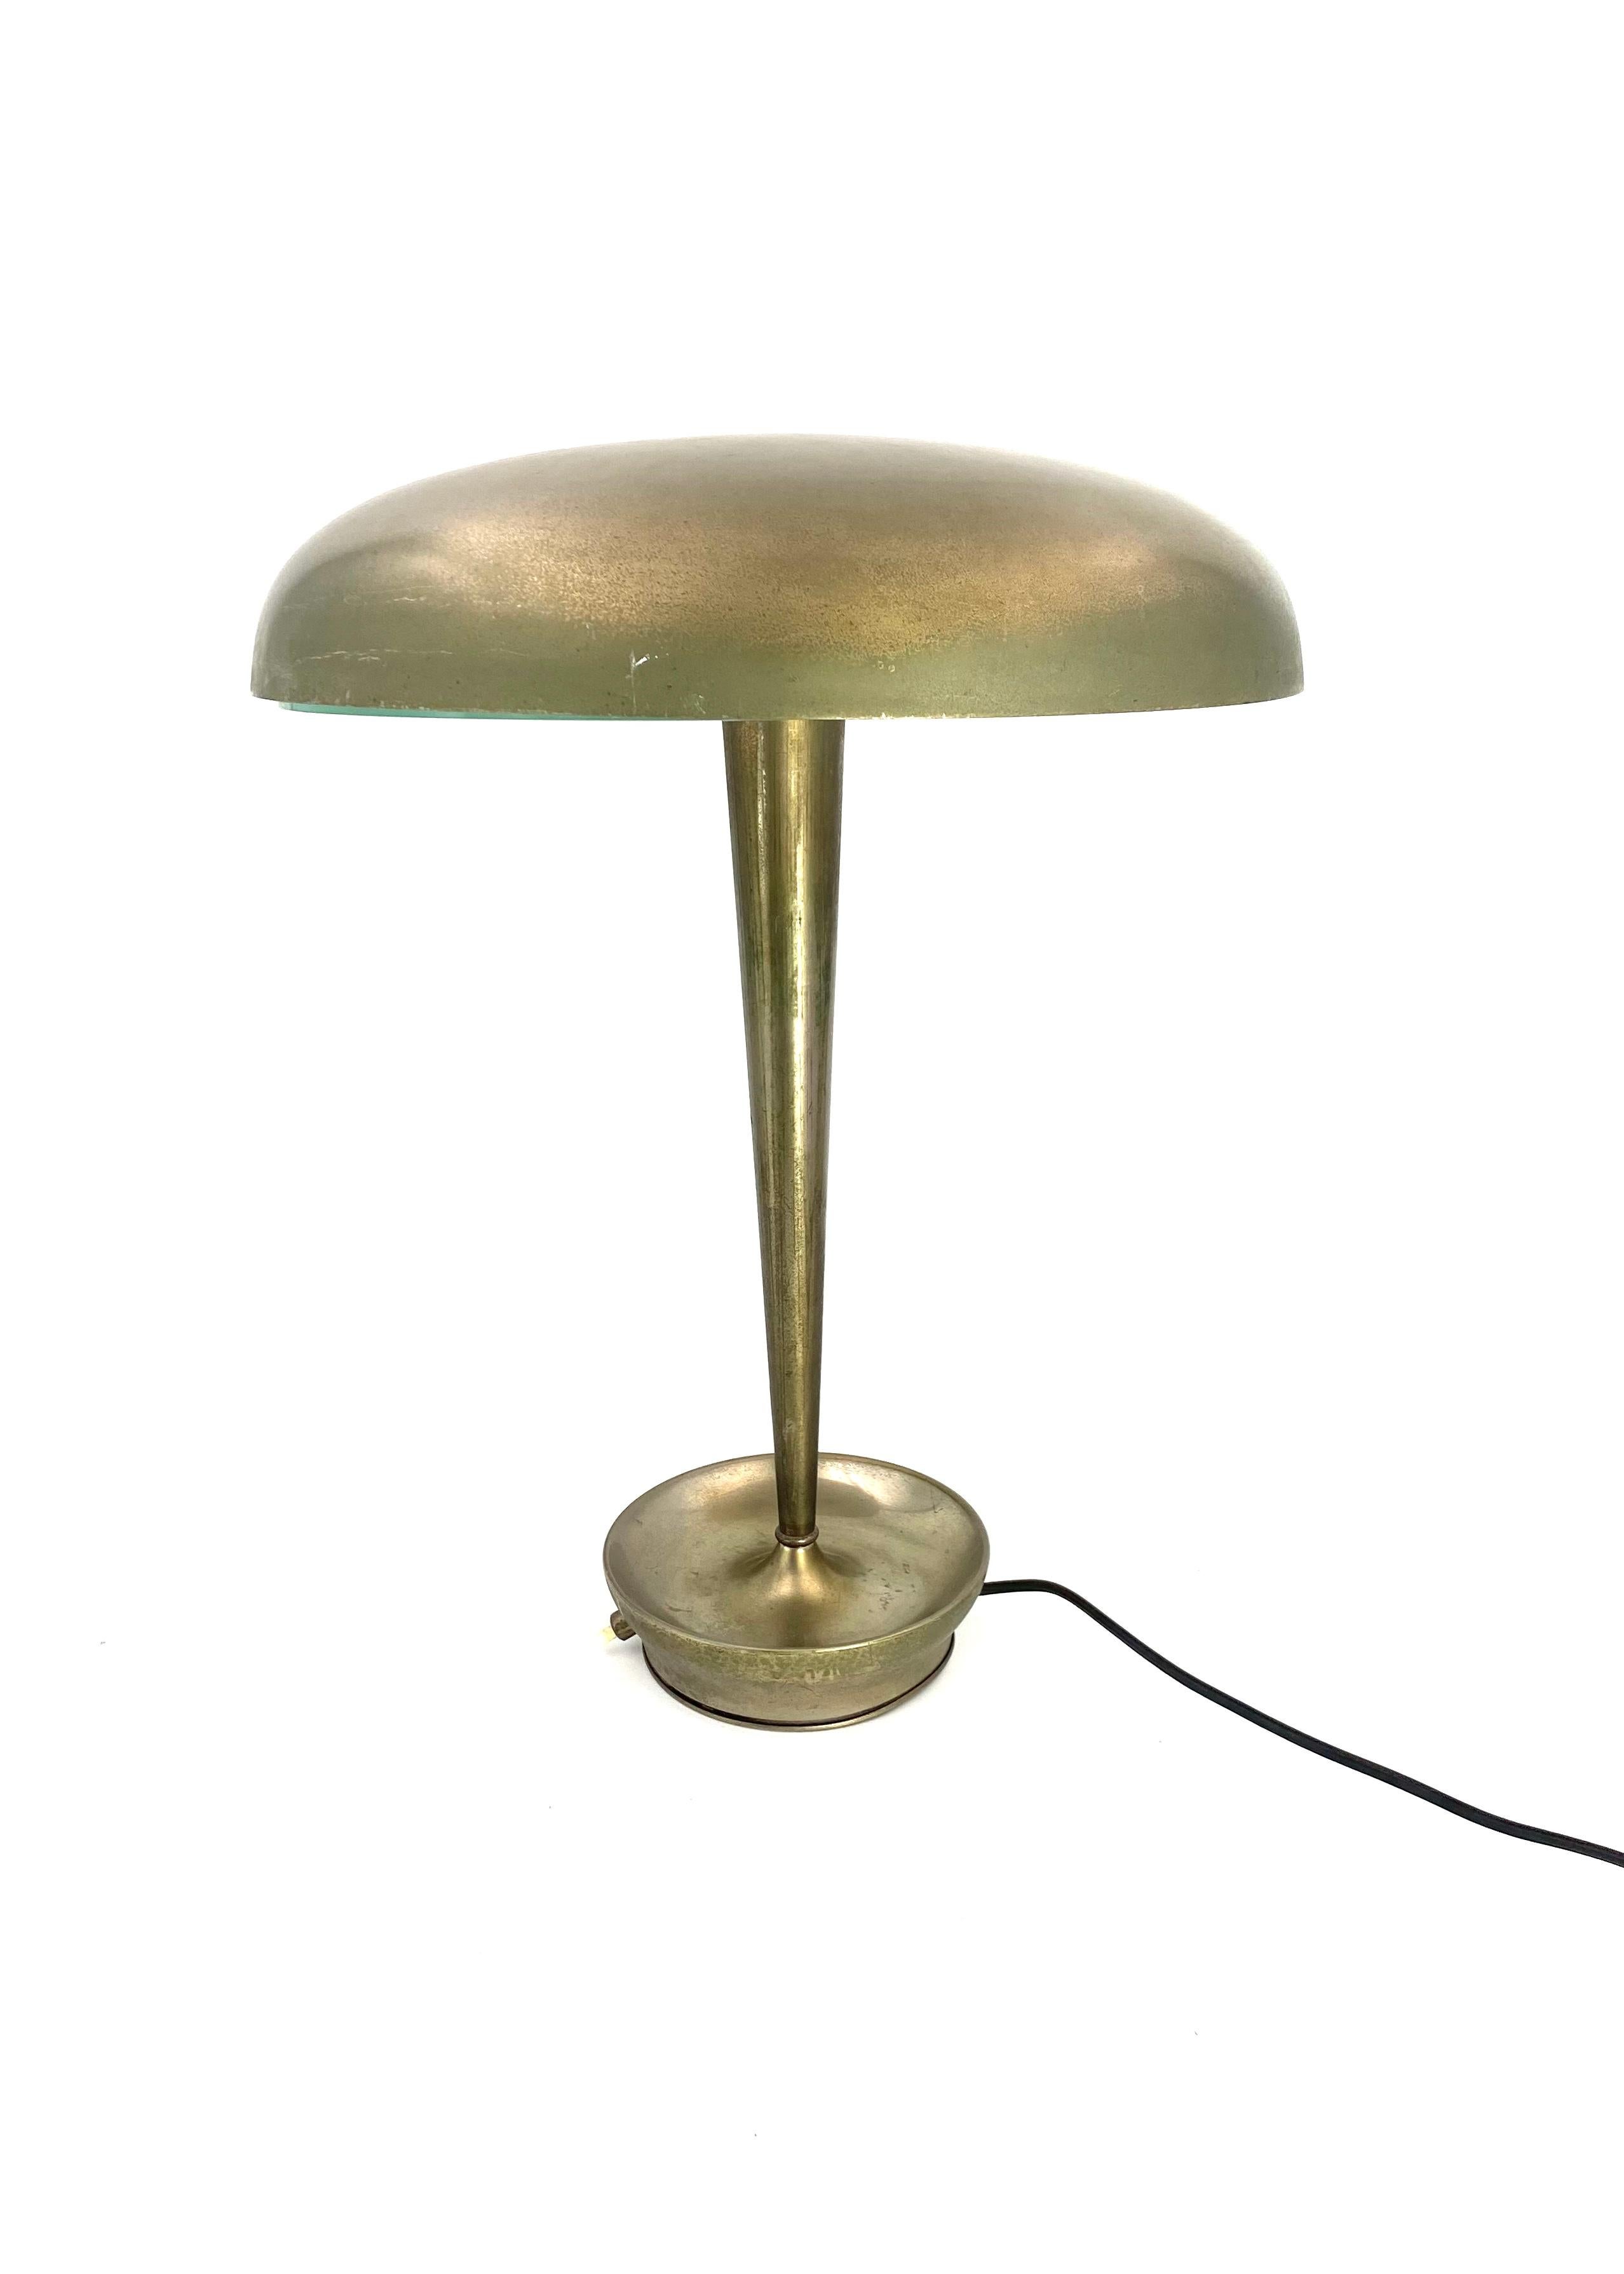 Stilnovo Desk Lamp Mod. D 4639, Stilnovo, Milan Italy, circa 1950s In Fair Condition For Sale In Firenze, IT